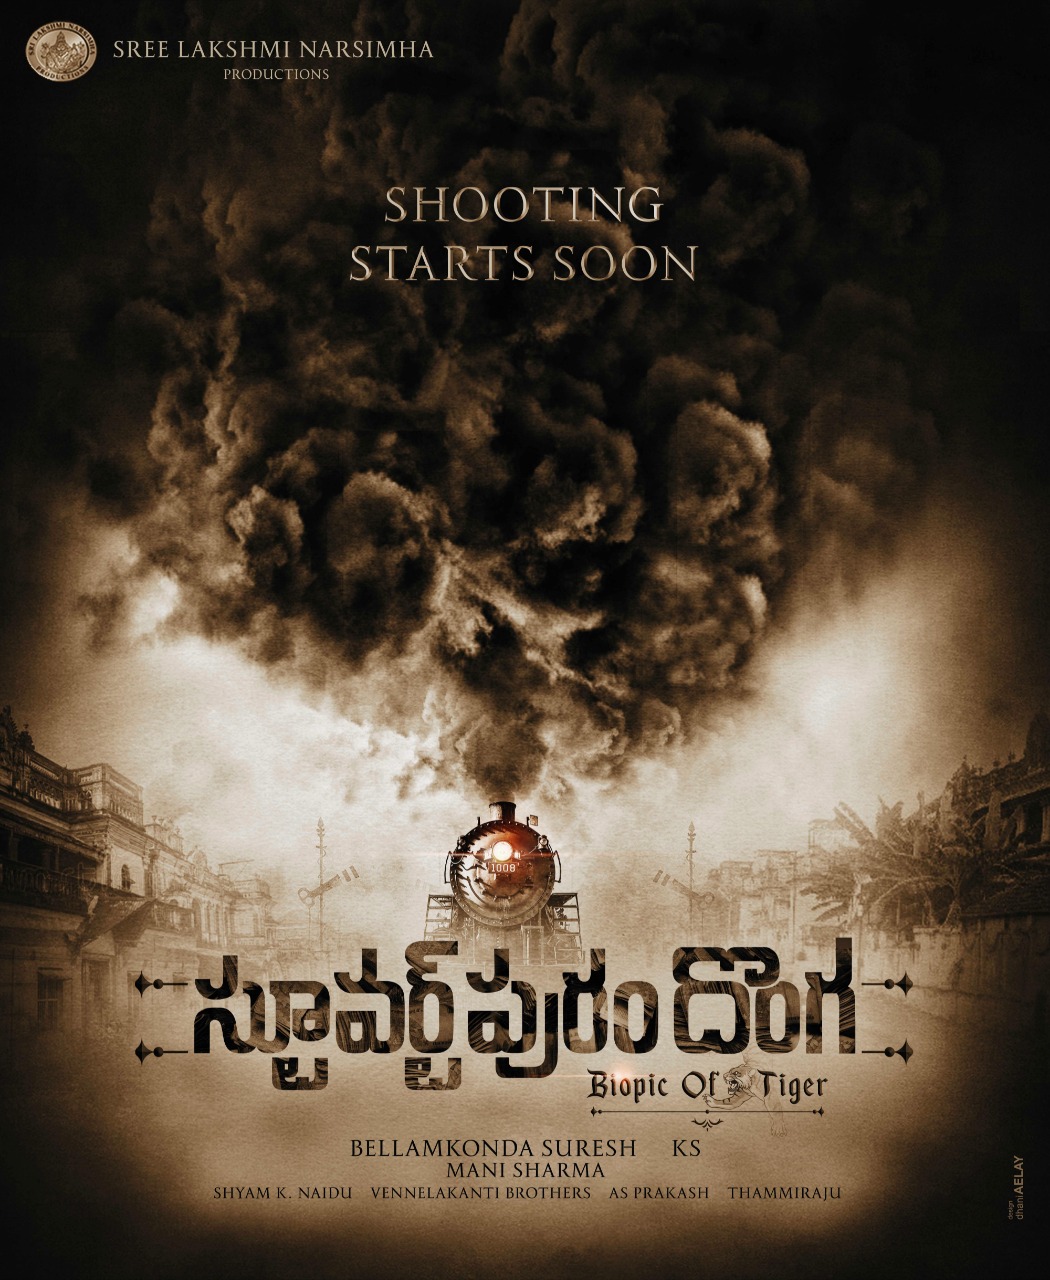 tale of robbery the Biopic of TIGER Stuartpuram Donga